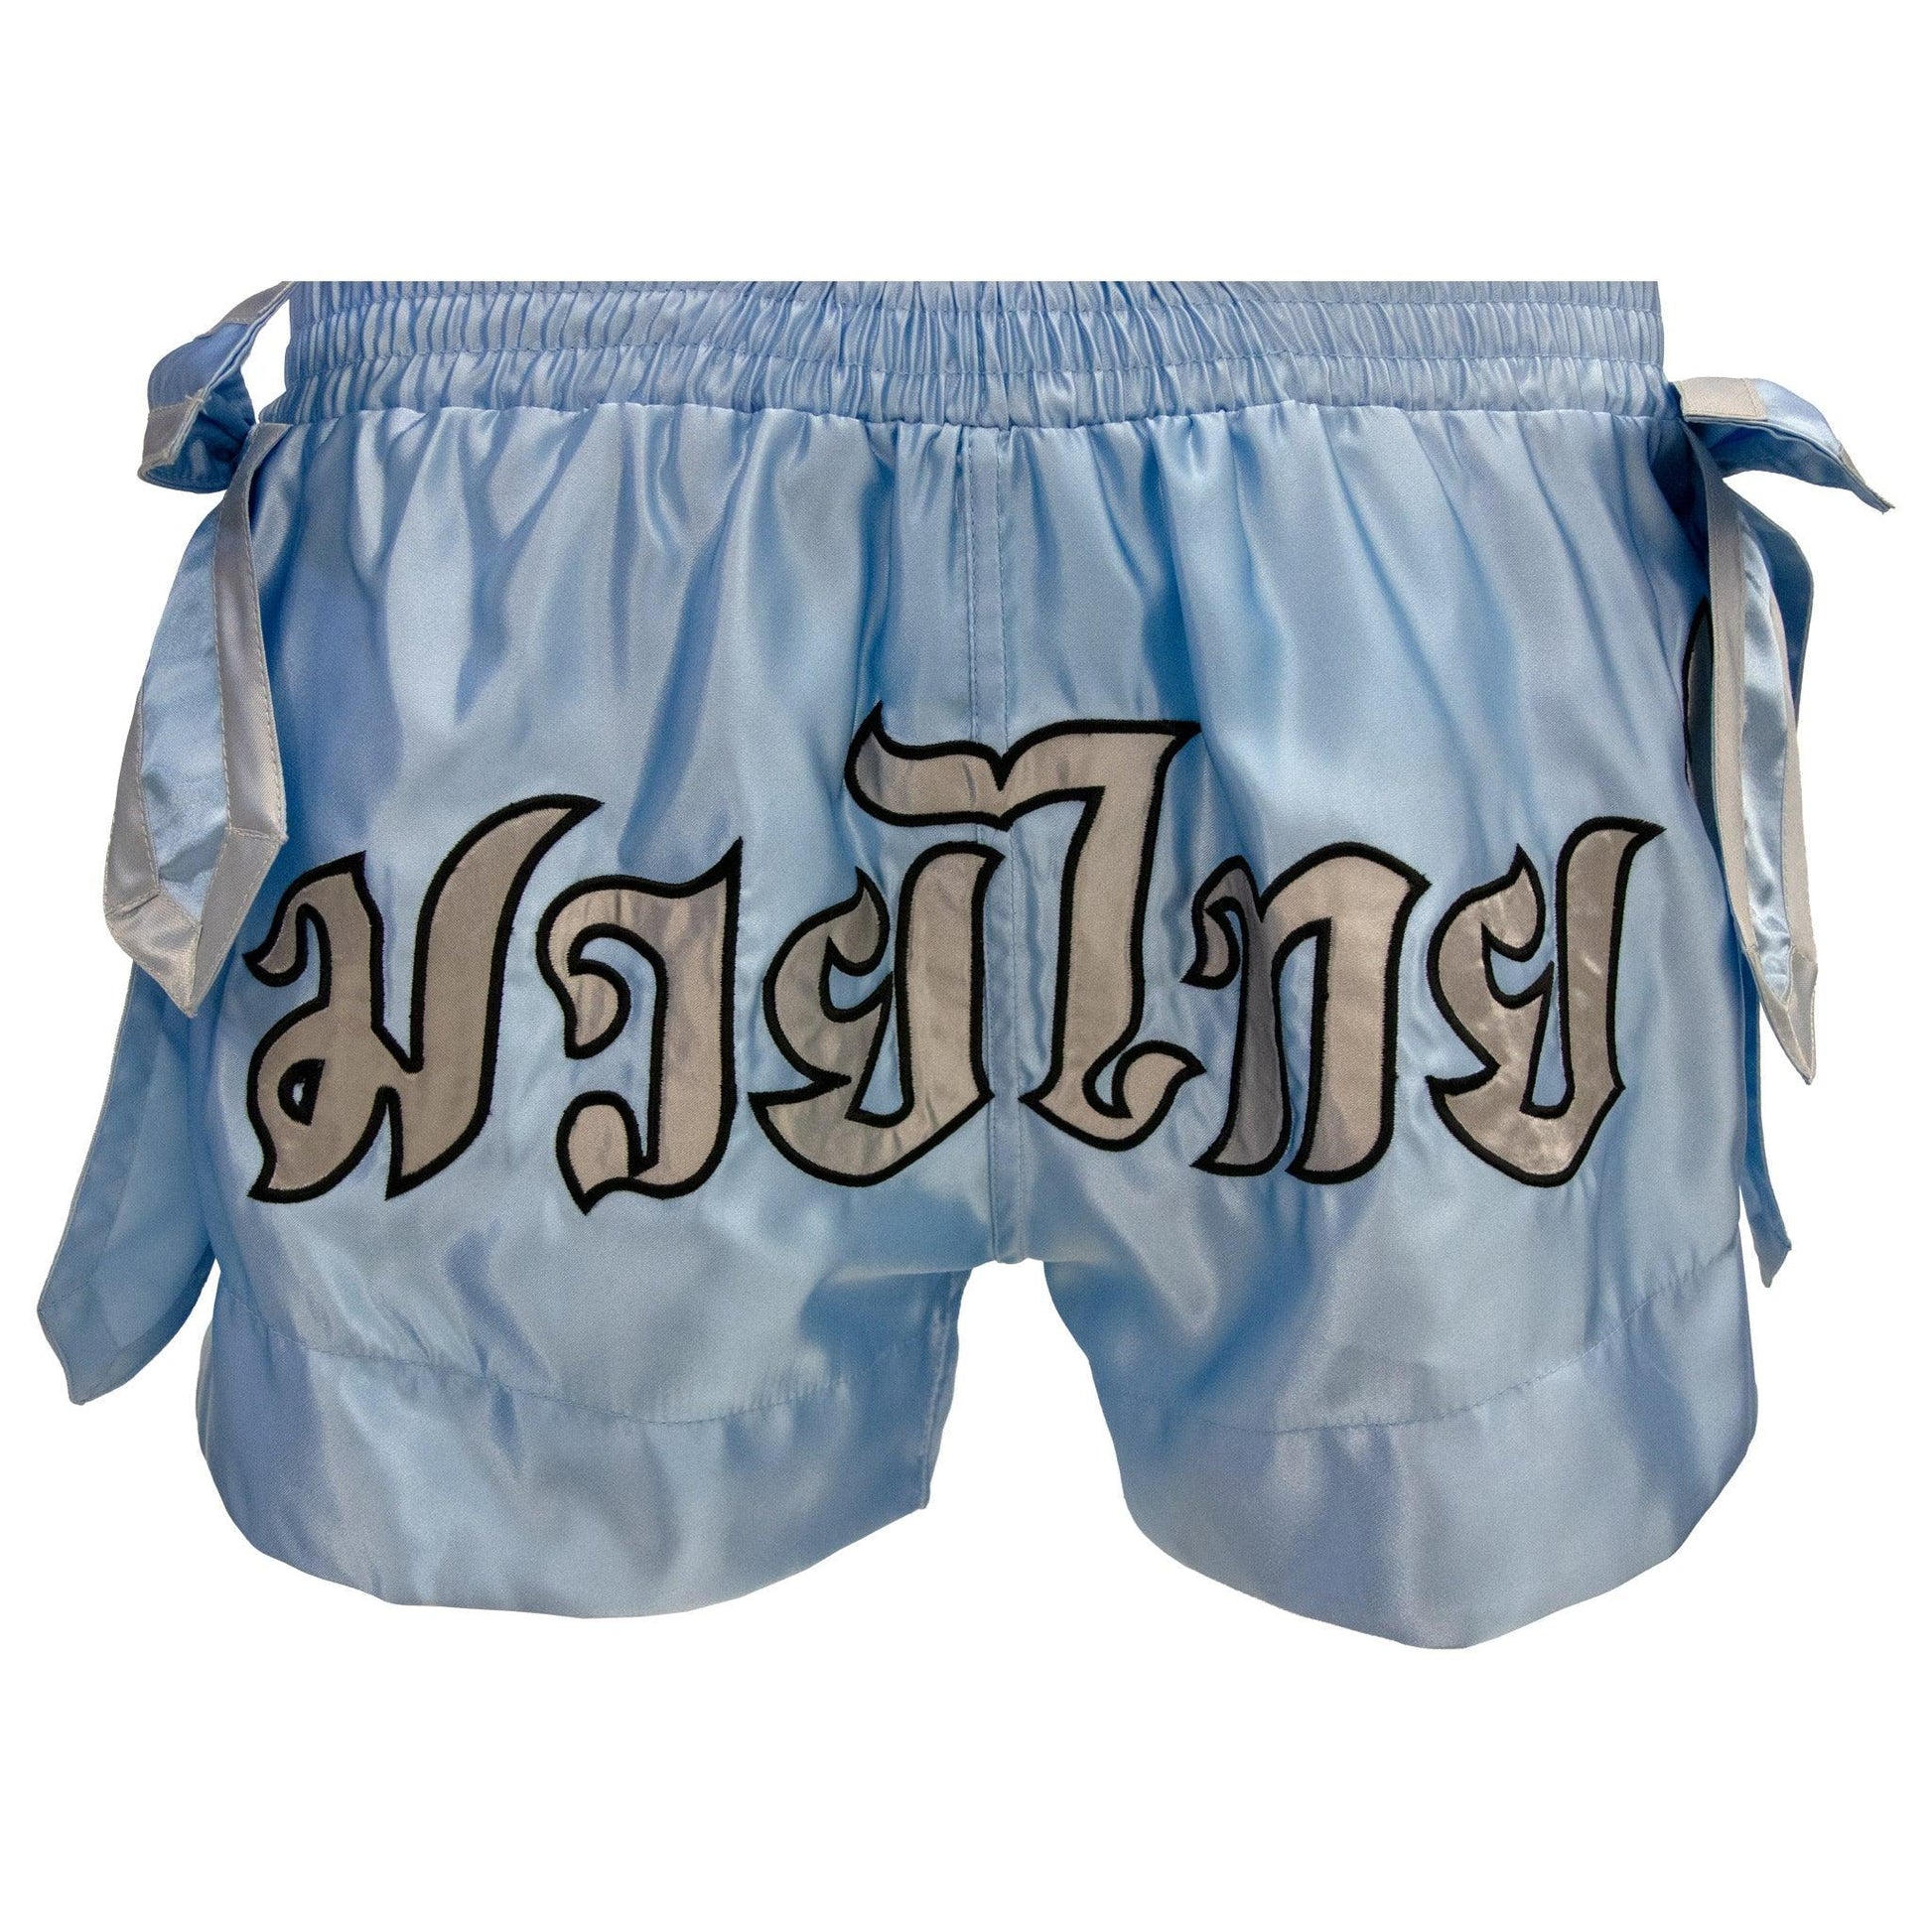 ProForce Sport Angel Wing Muay Thai Shorts - w/ Light Blue Bows - Violent Art Shop